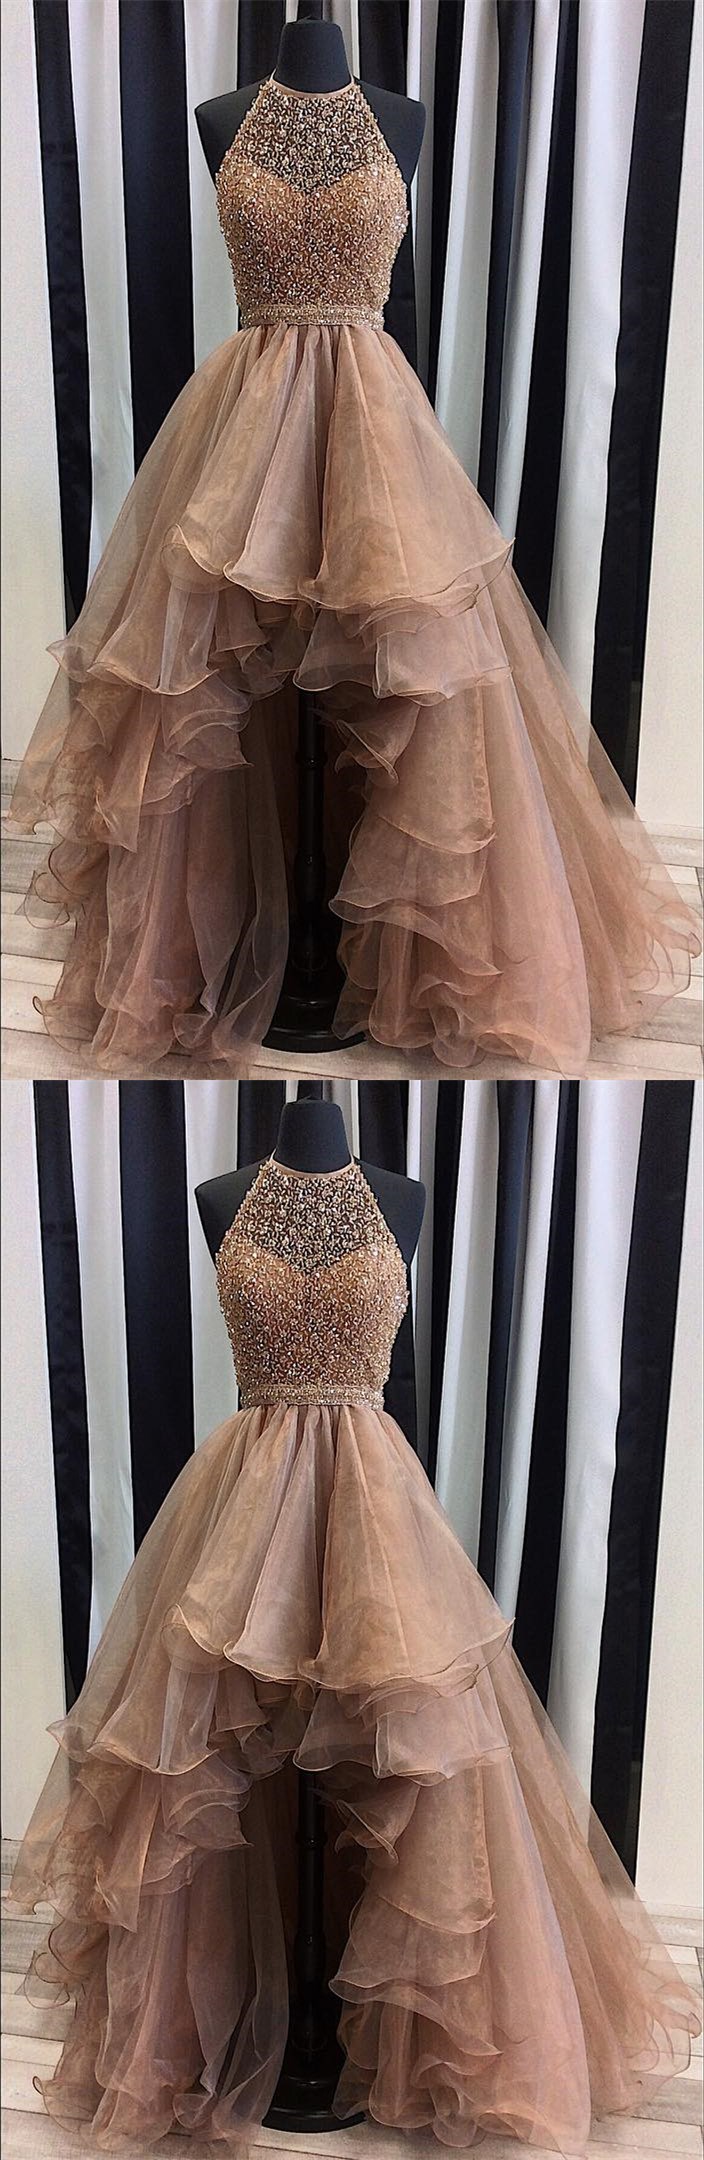 Sequins Beaded Prom Dress,organza Prom Dress,high Low Prom Dress,halter ...